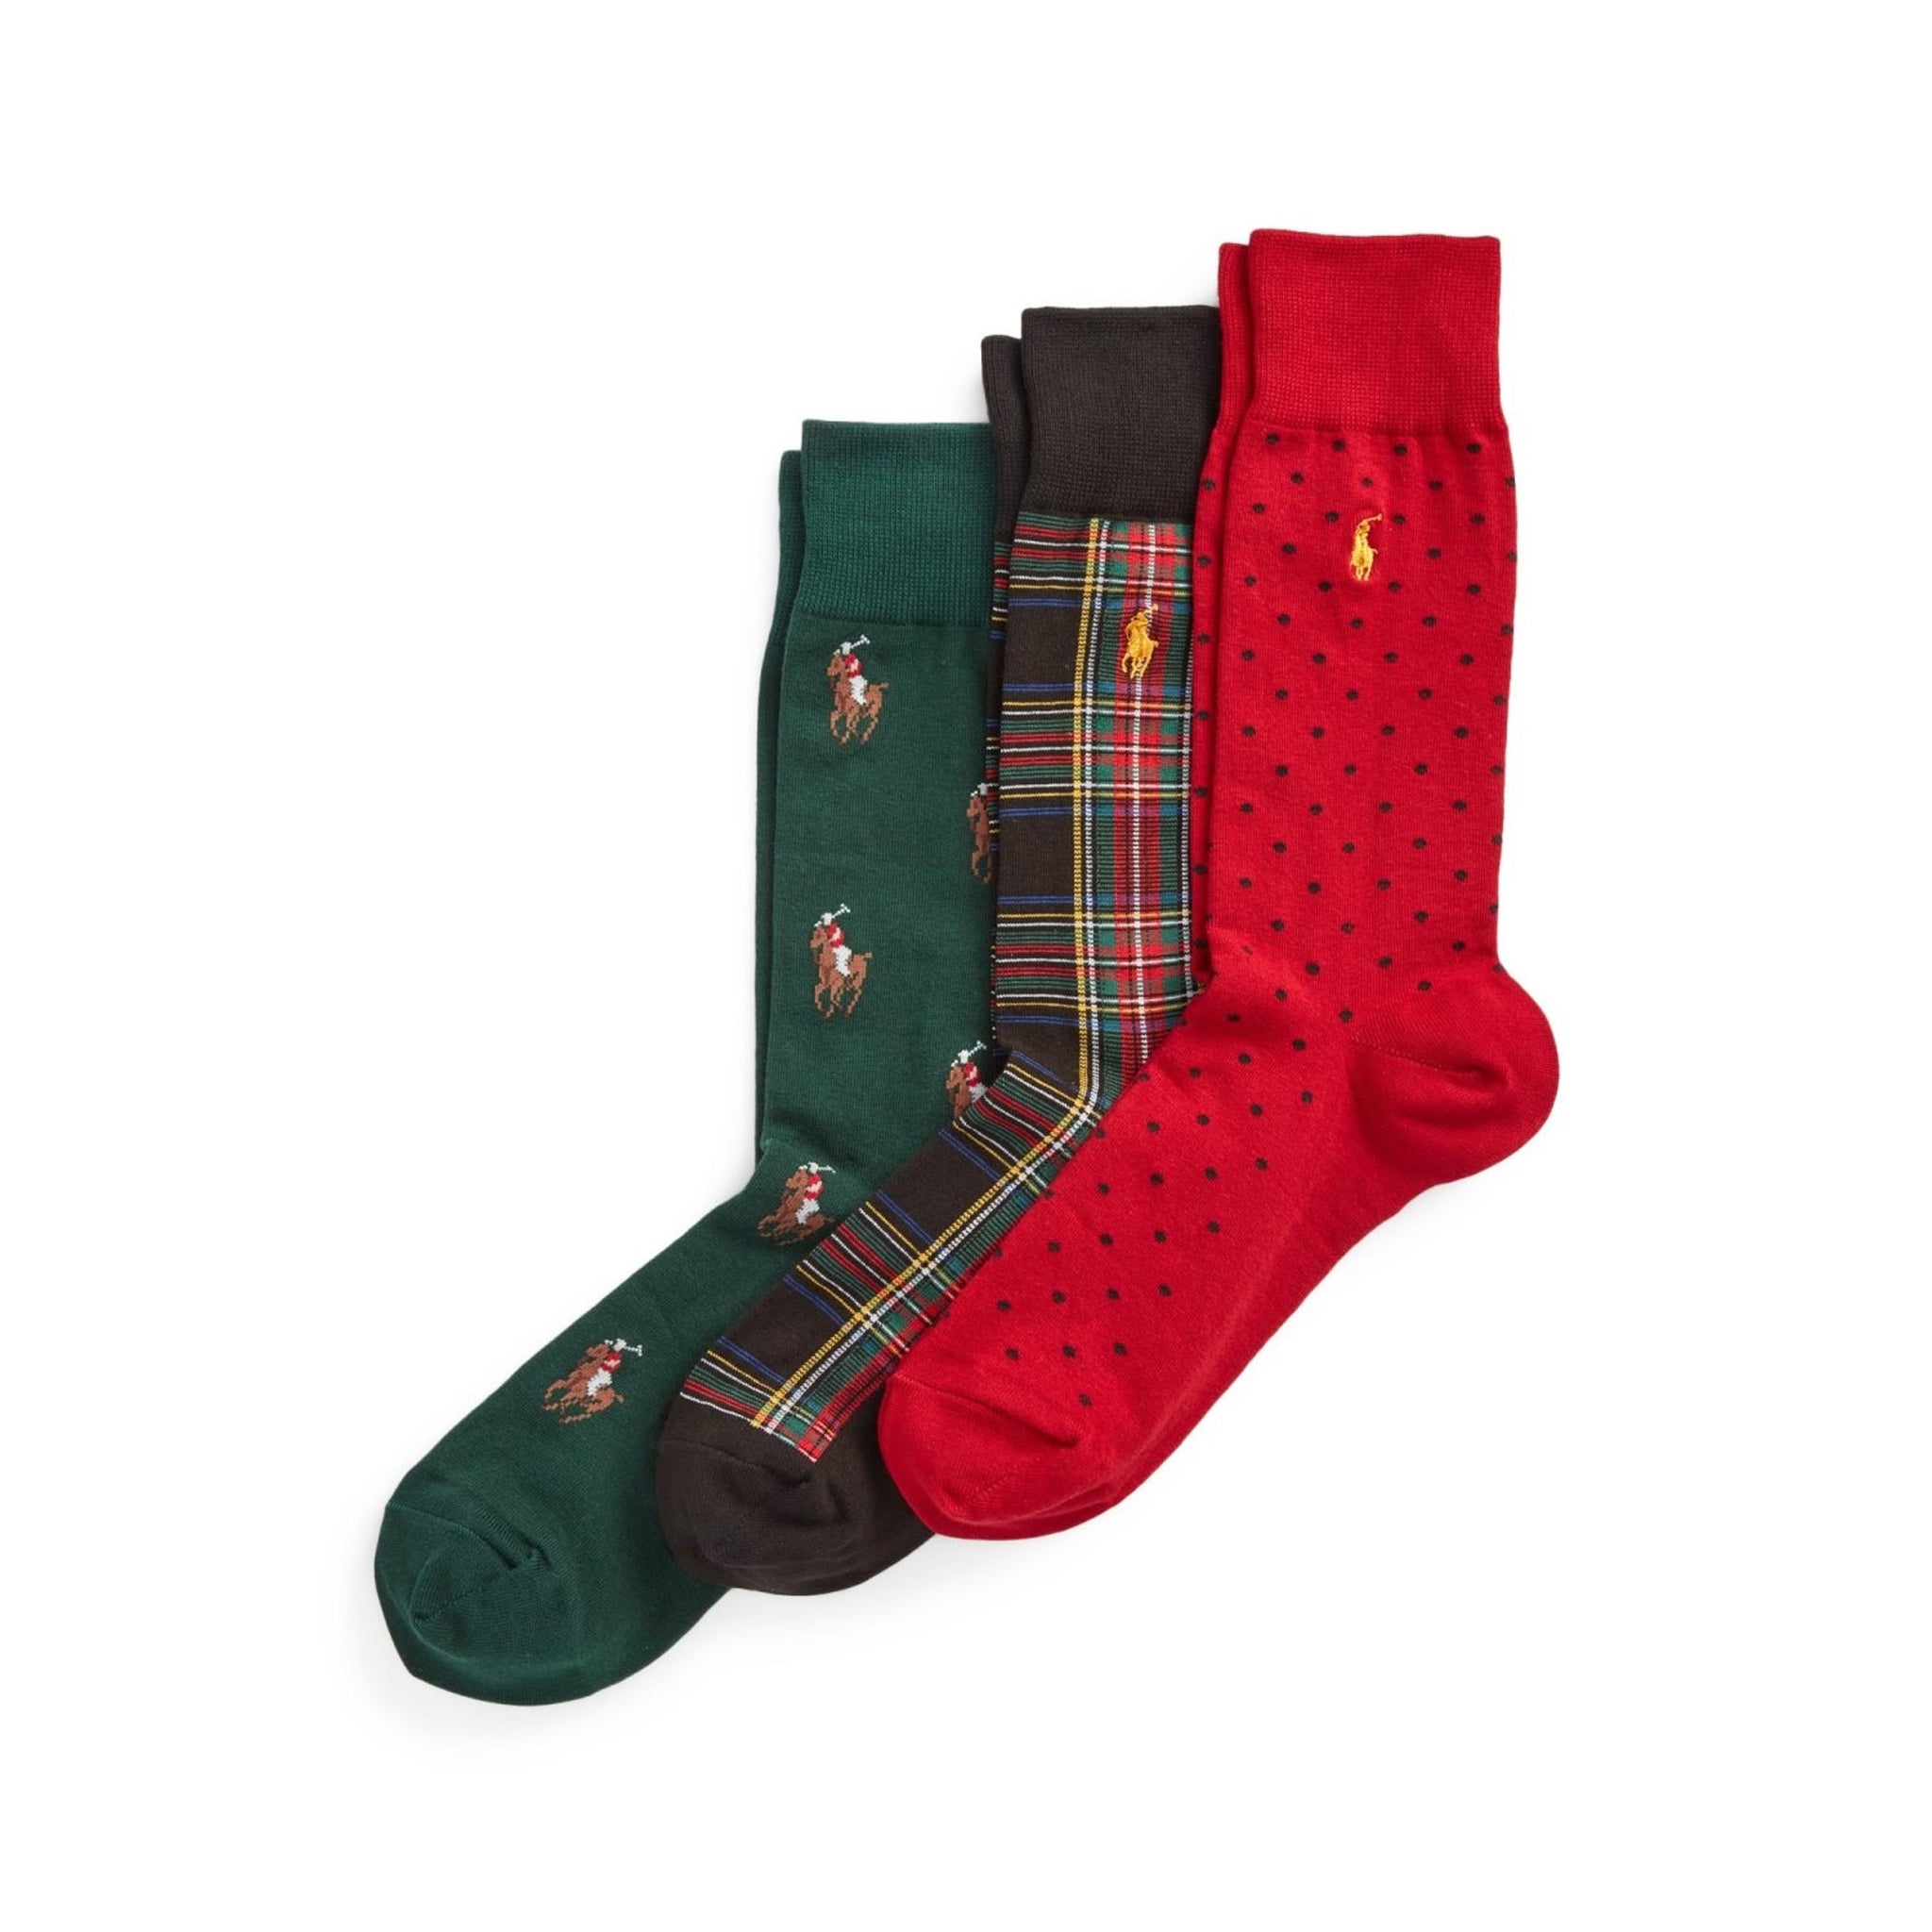 polo-ralph-lauren-tartan-pony-crew-socks-gift-set-449858068-red-black-green-001